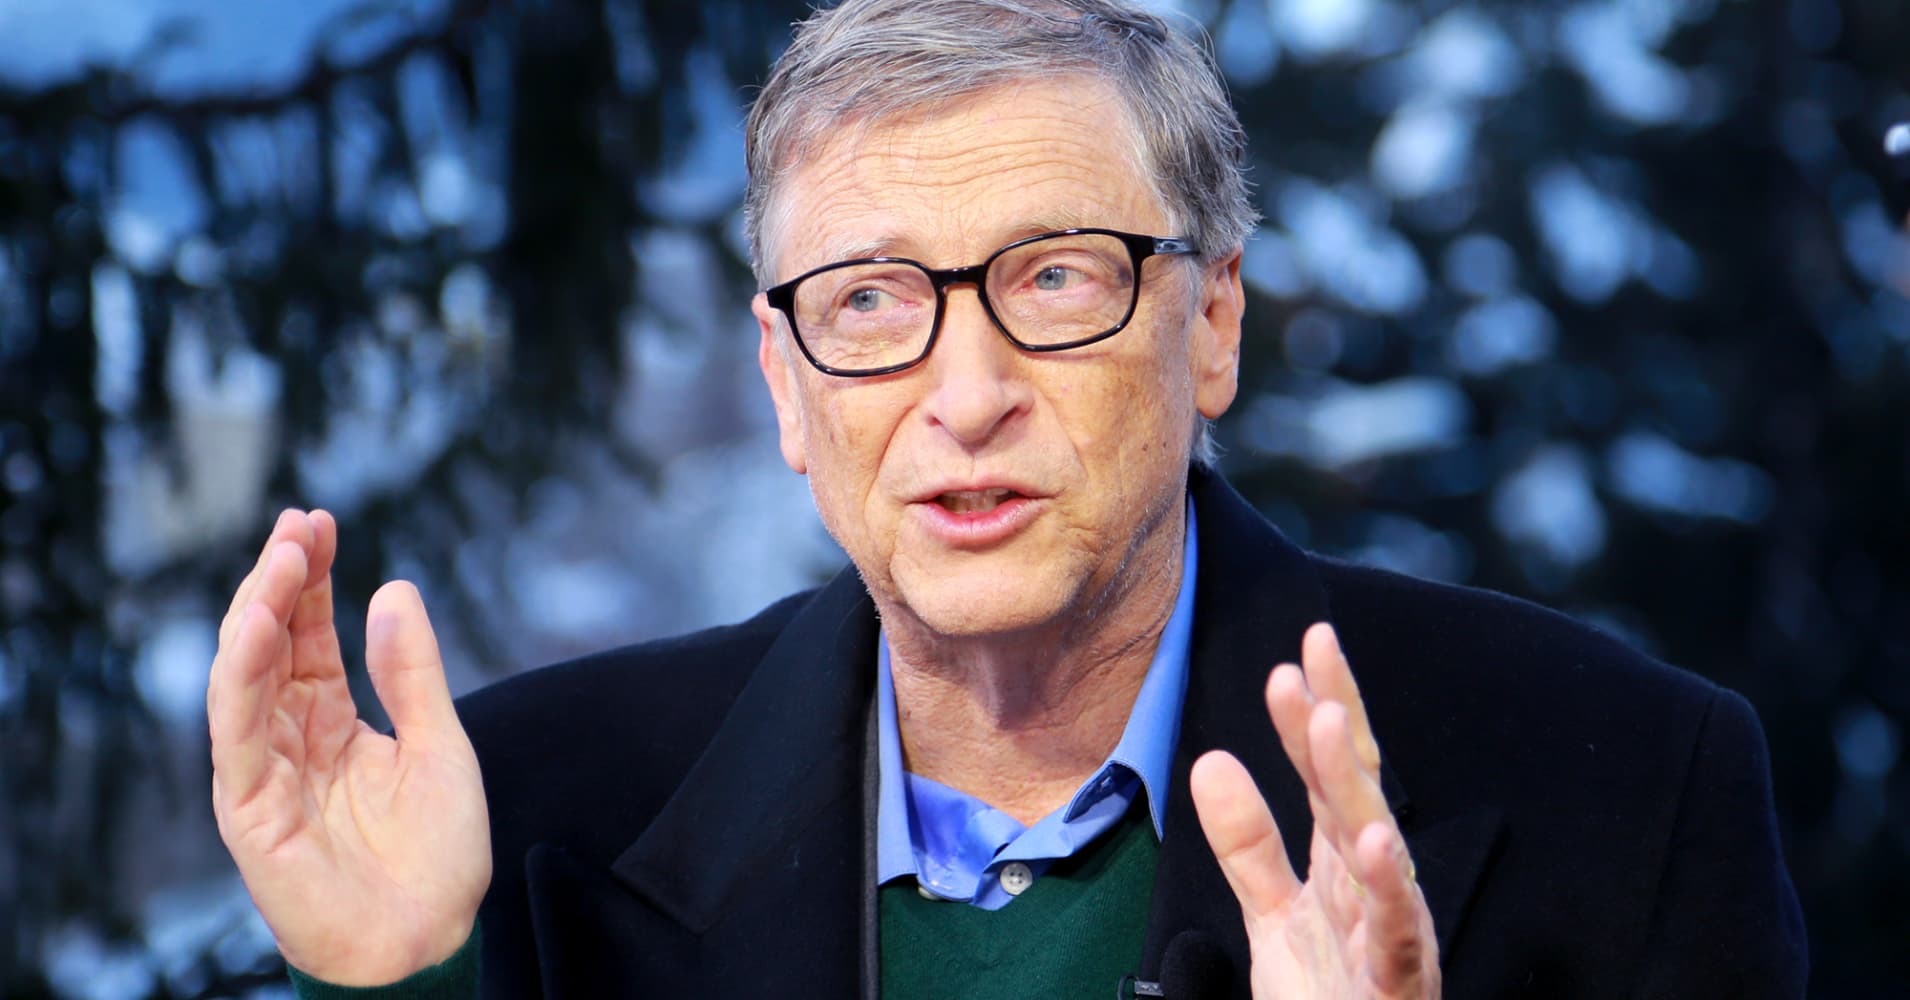 Bill Gates calls cryptocurrency 'super risky' in Reddit AMA